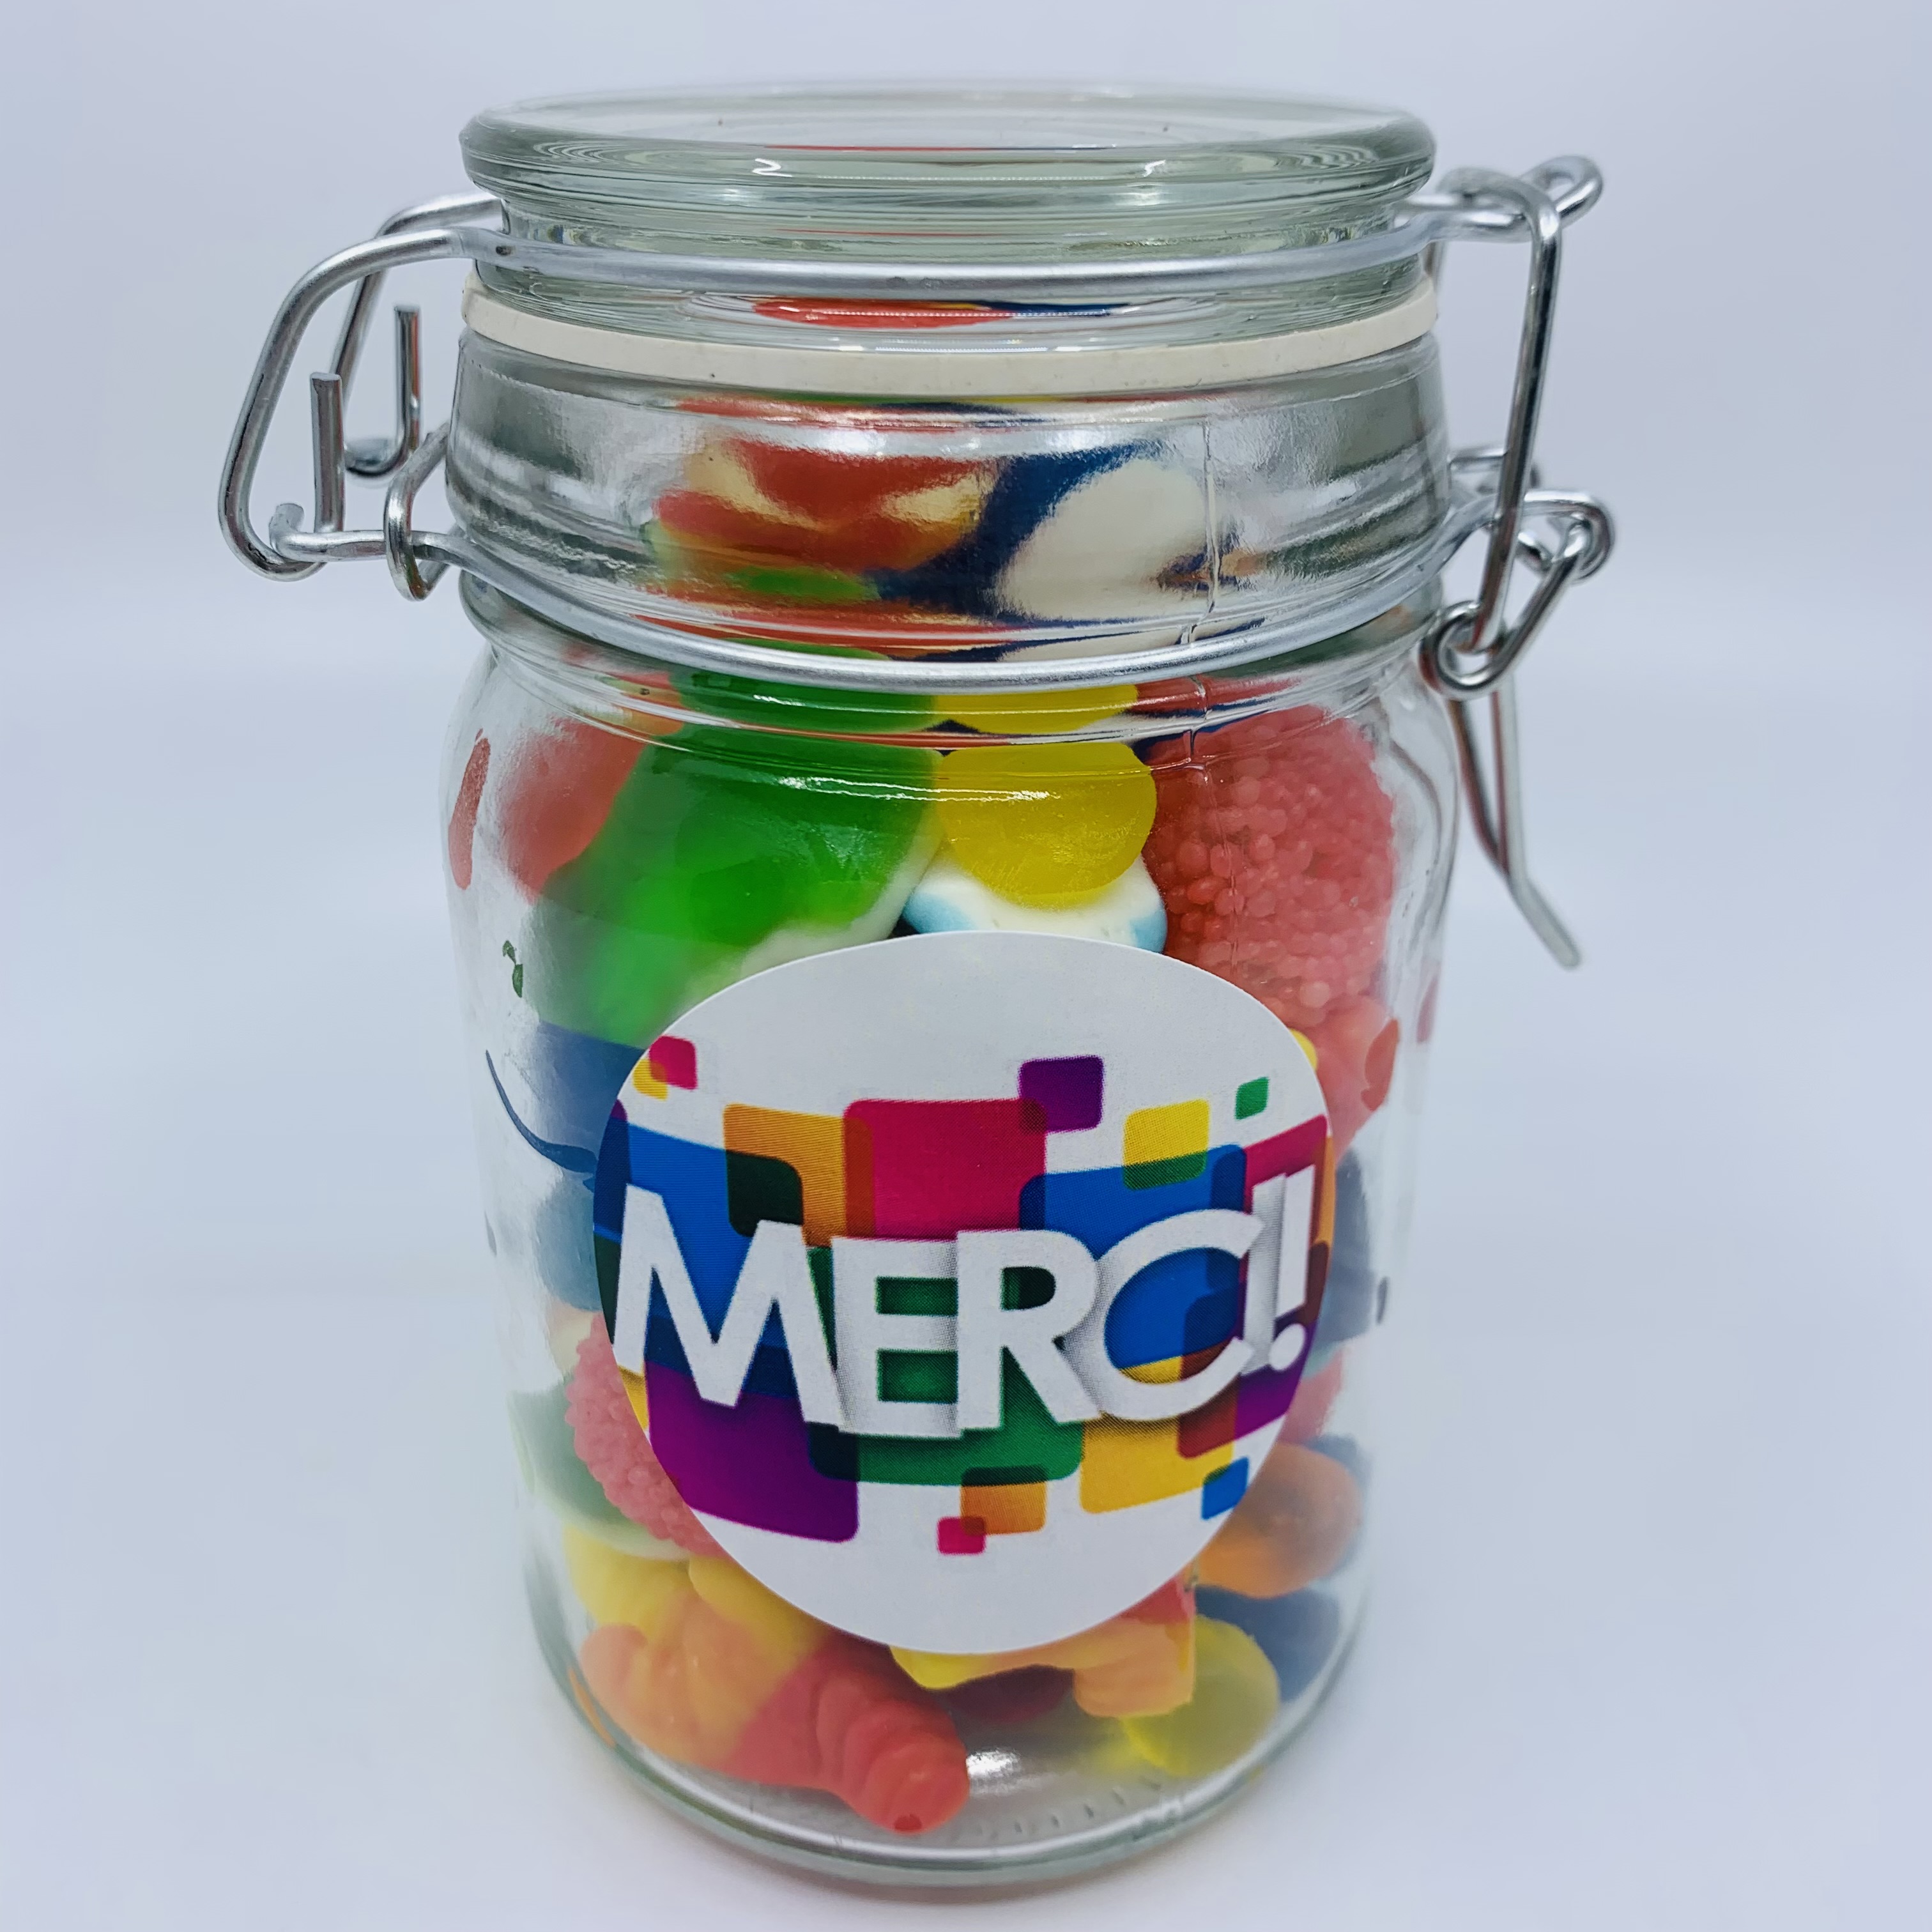 Clip jar of jellies